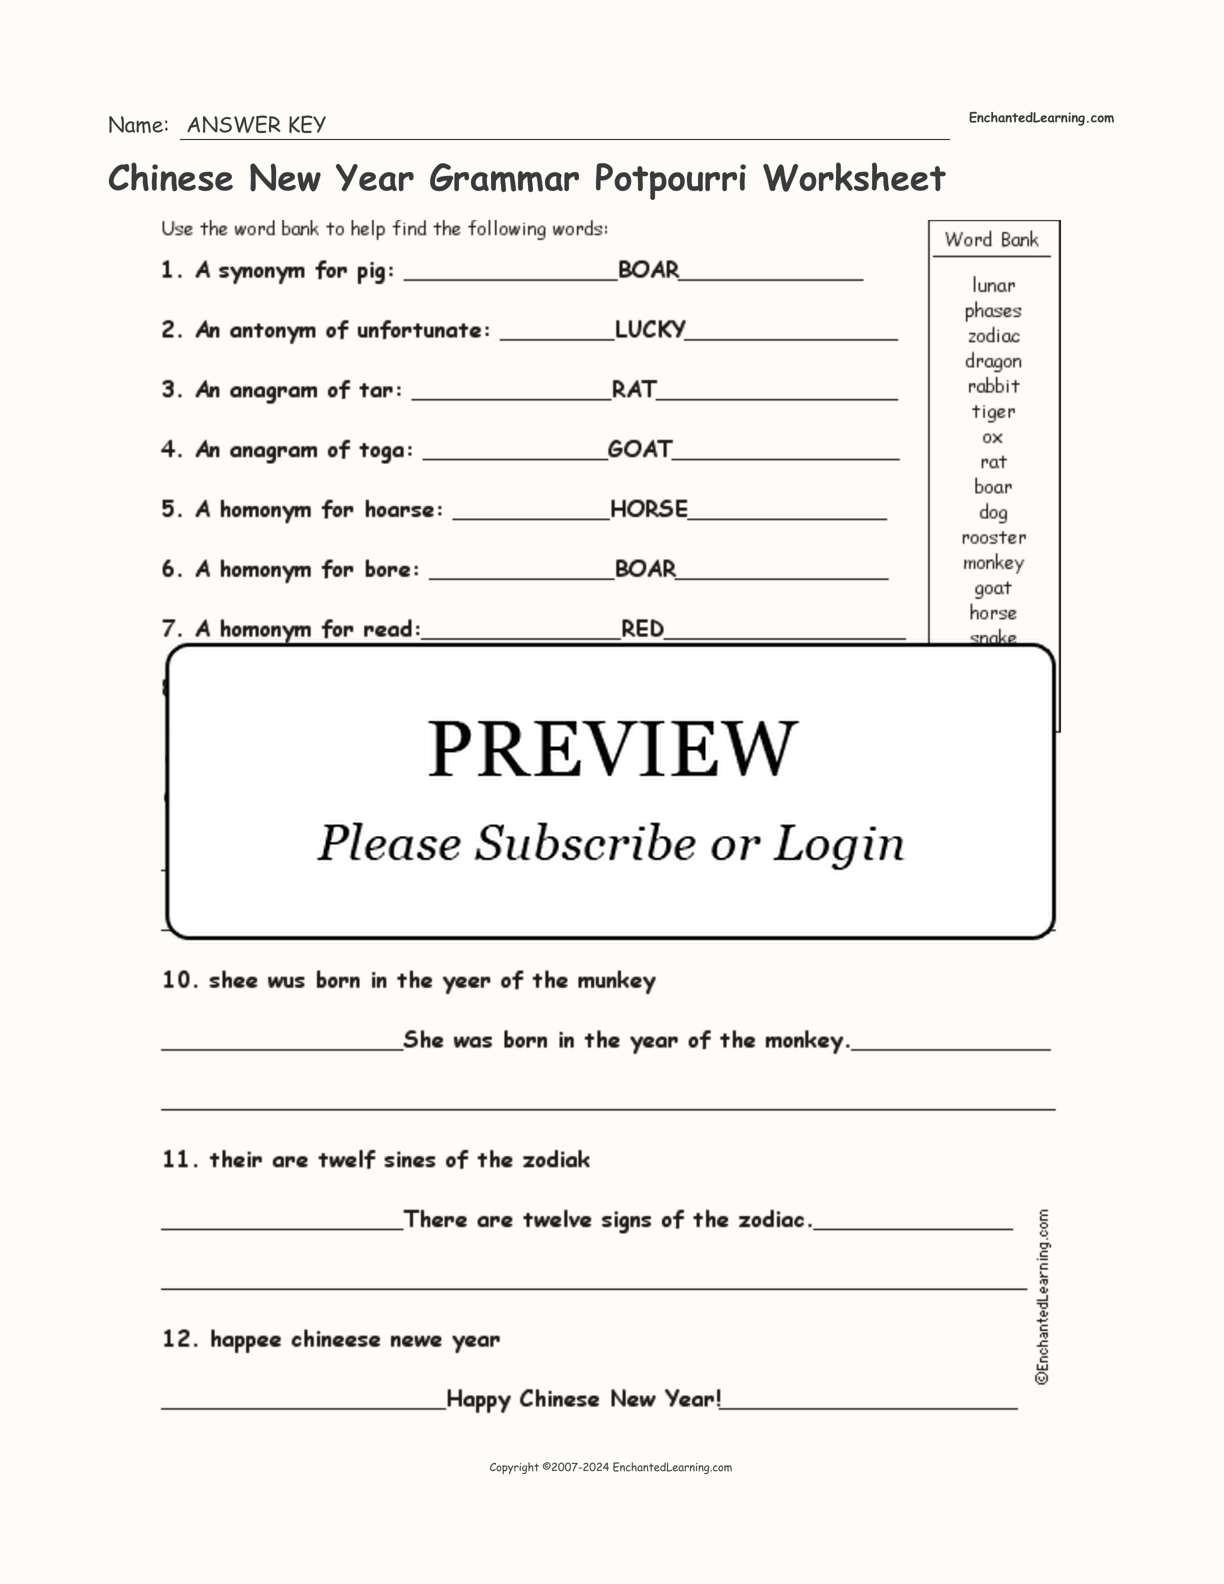 Chinese New Year Grammar Potpourri Worksheet interactive worksheet page 2